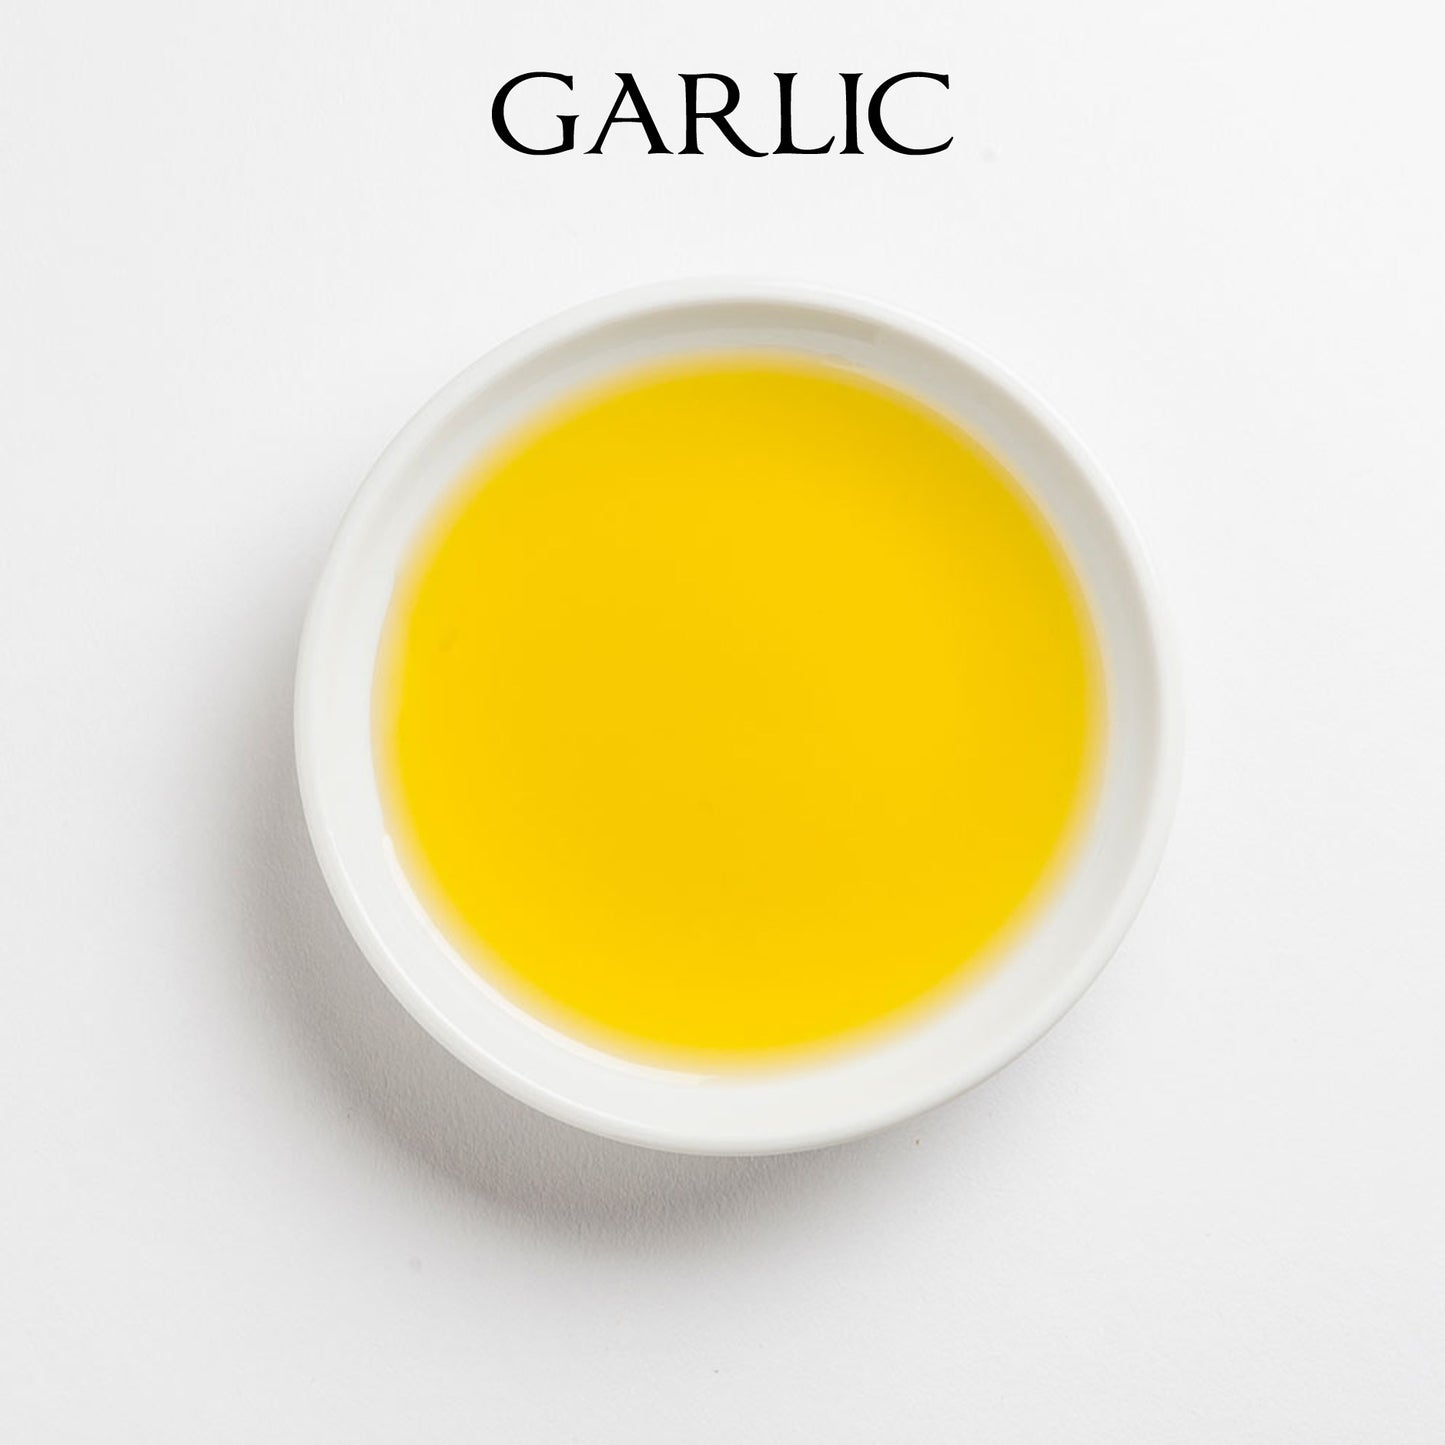 GARLIC Infused Olive Oil (Roasted) - California